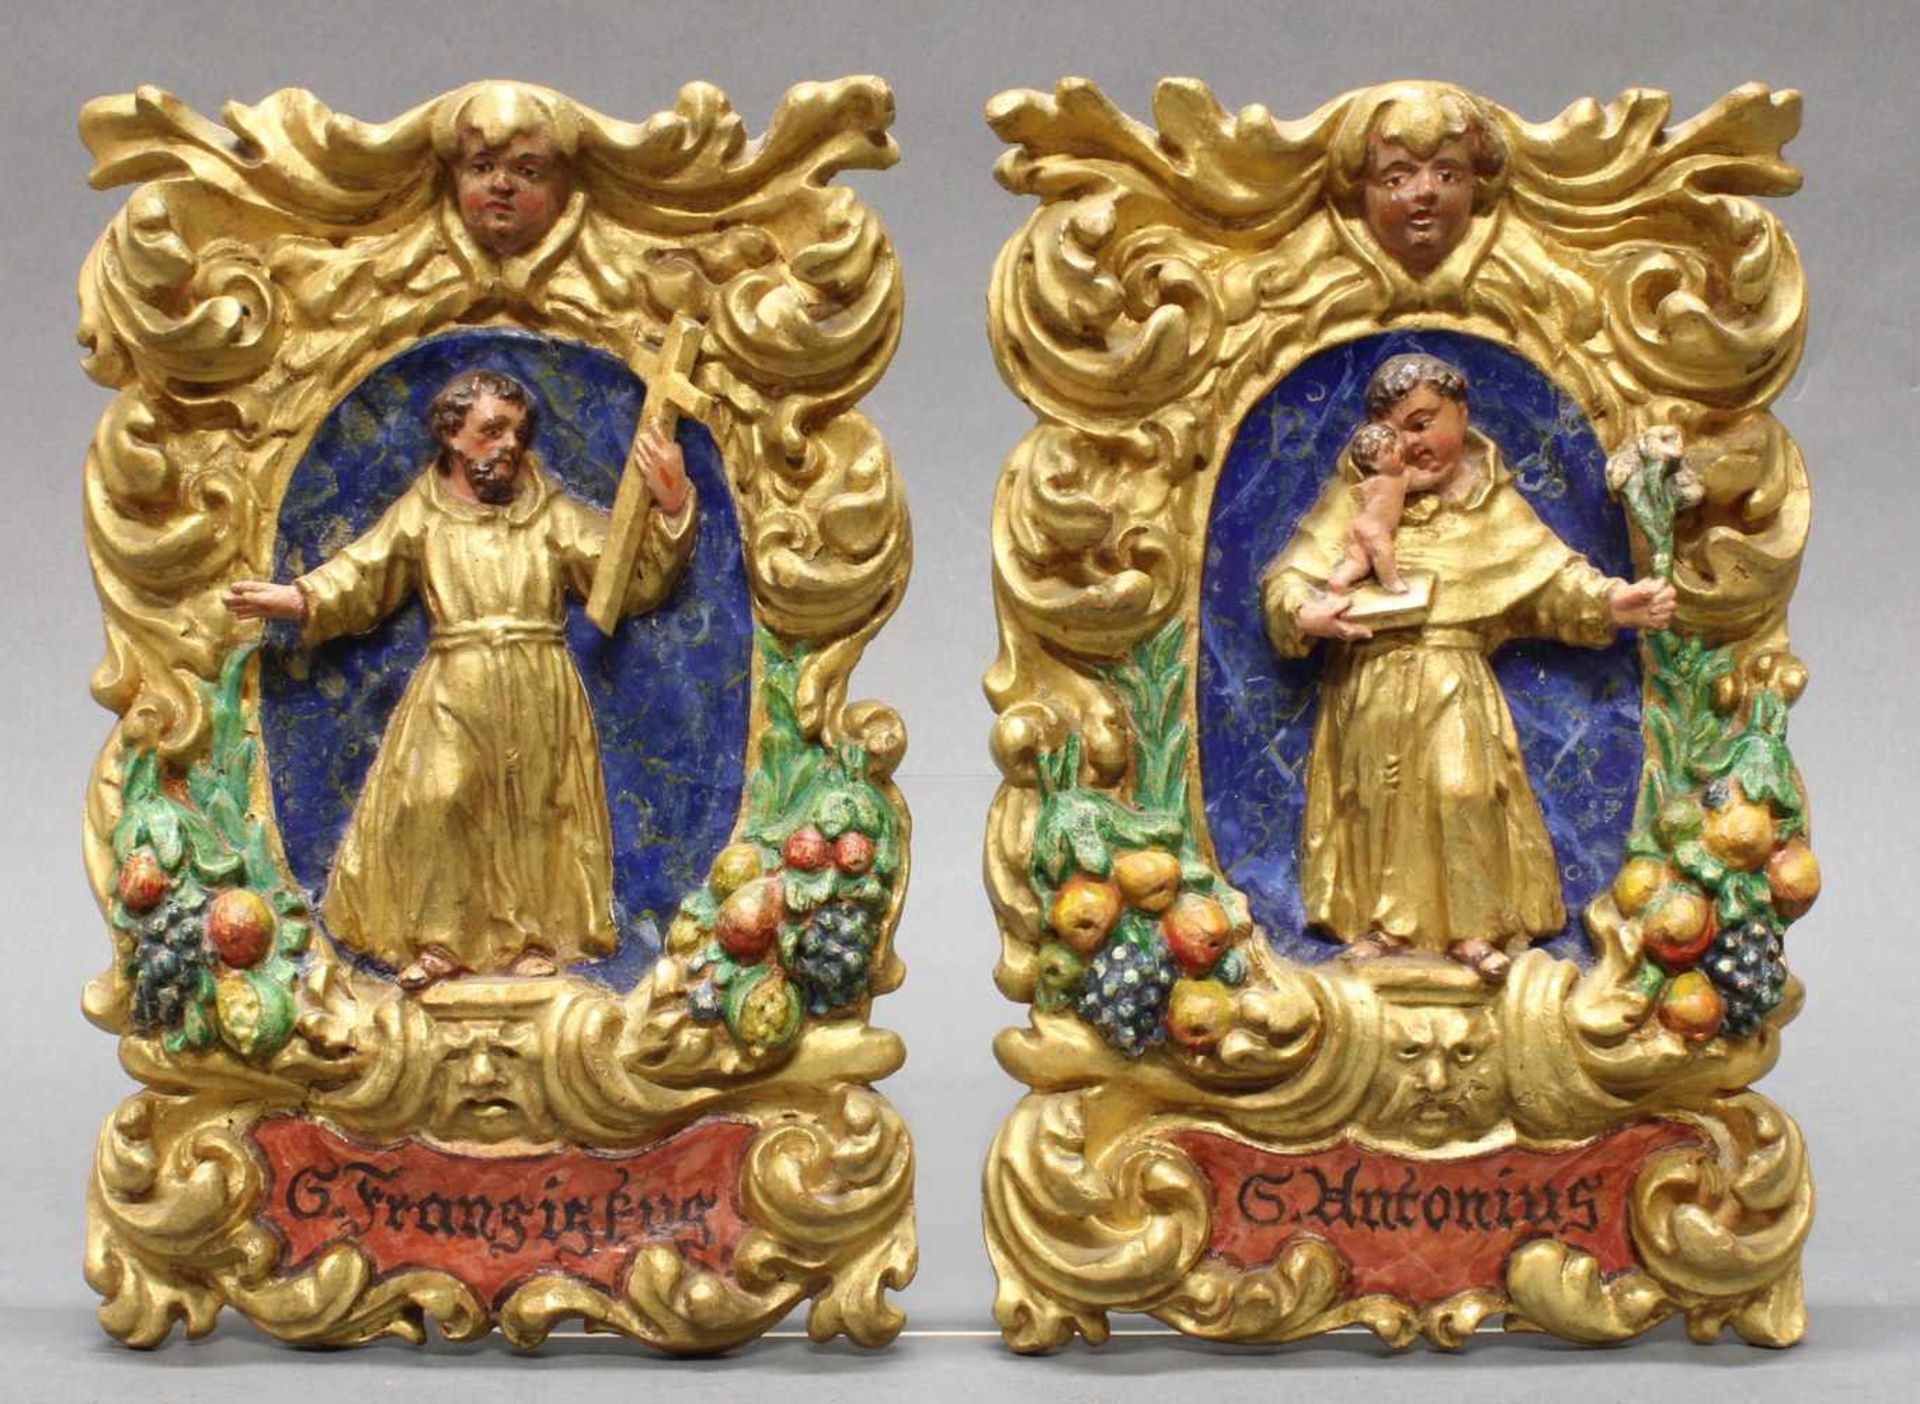 2 Reliefs, Holz geschnitzt, "Hl. Franziskus", "Hl. Antonius", 19. Jh., im Stil des 18. Jh., 26 x